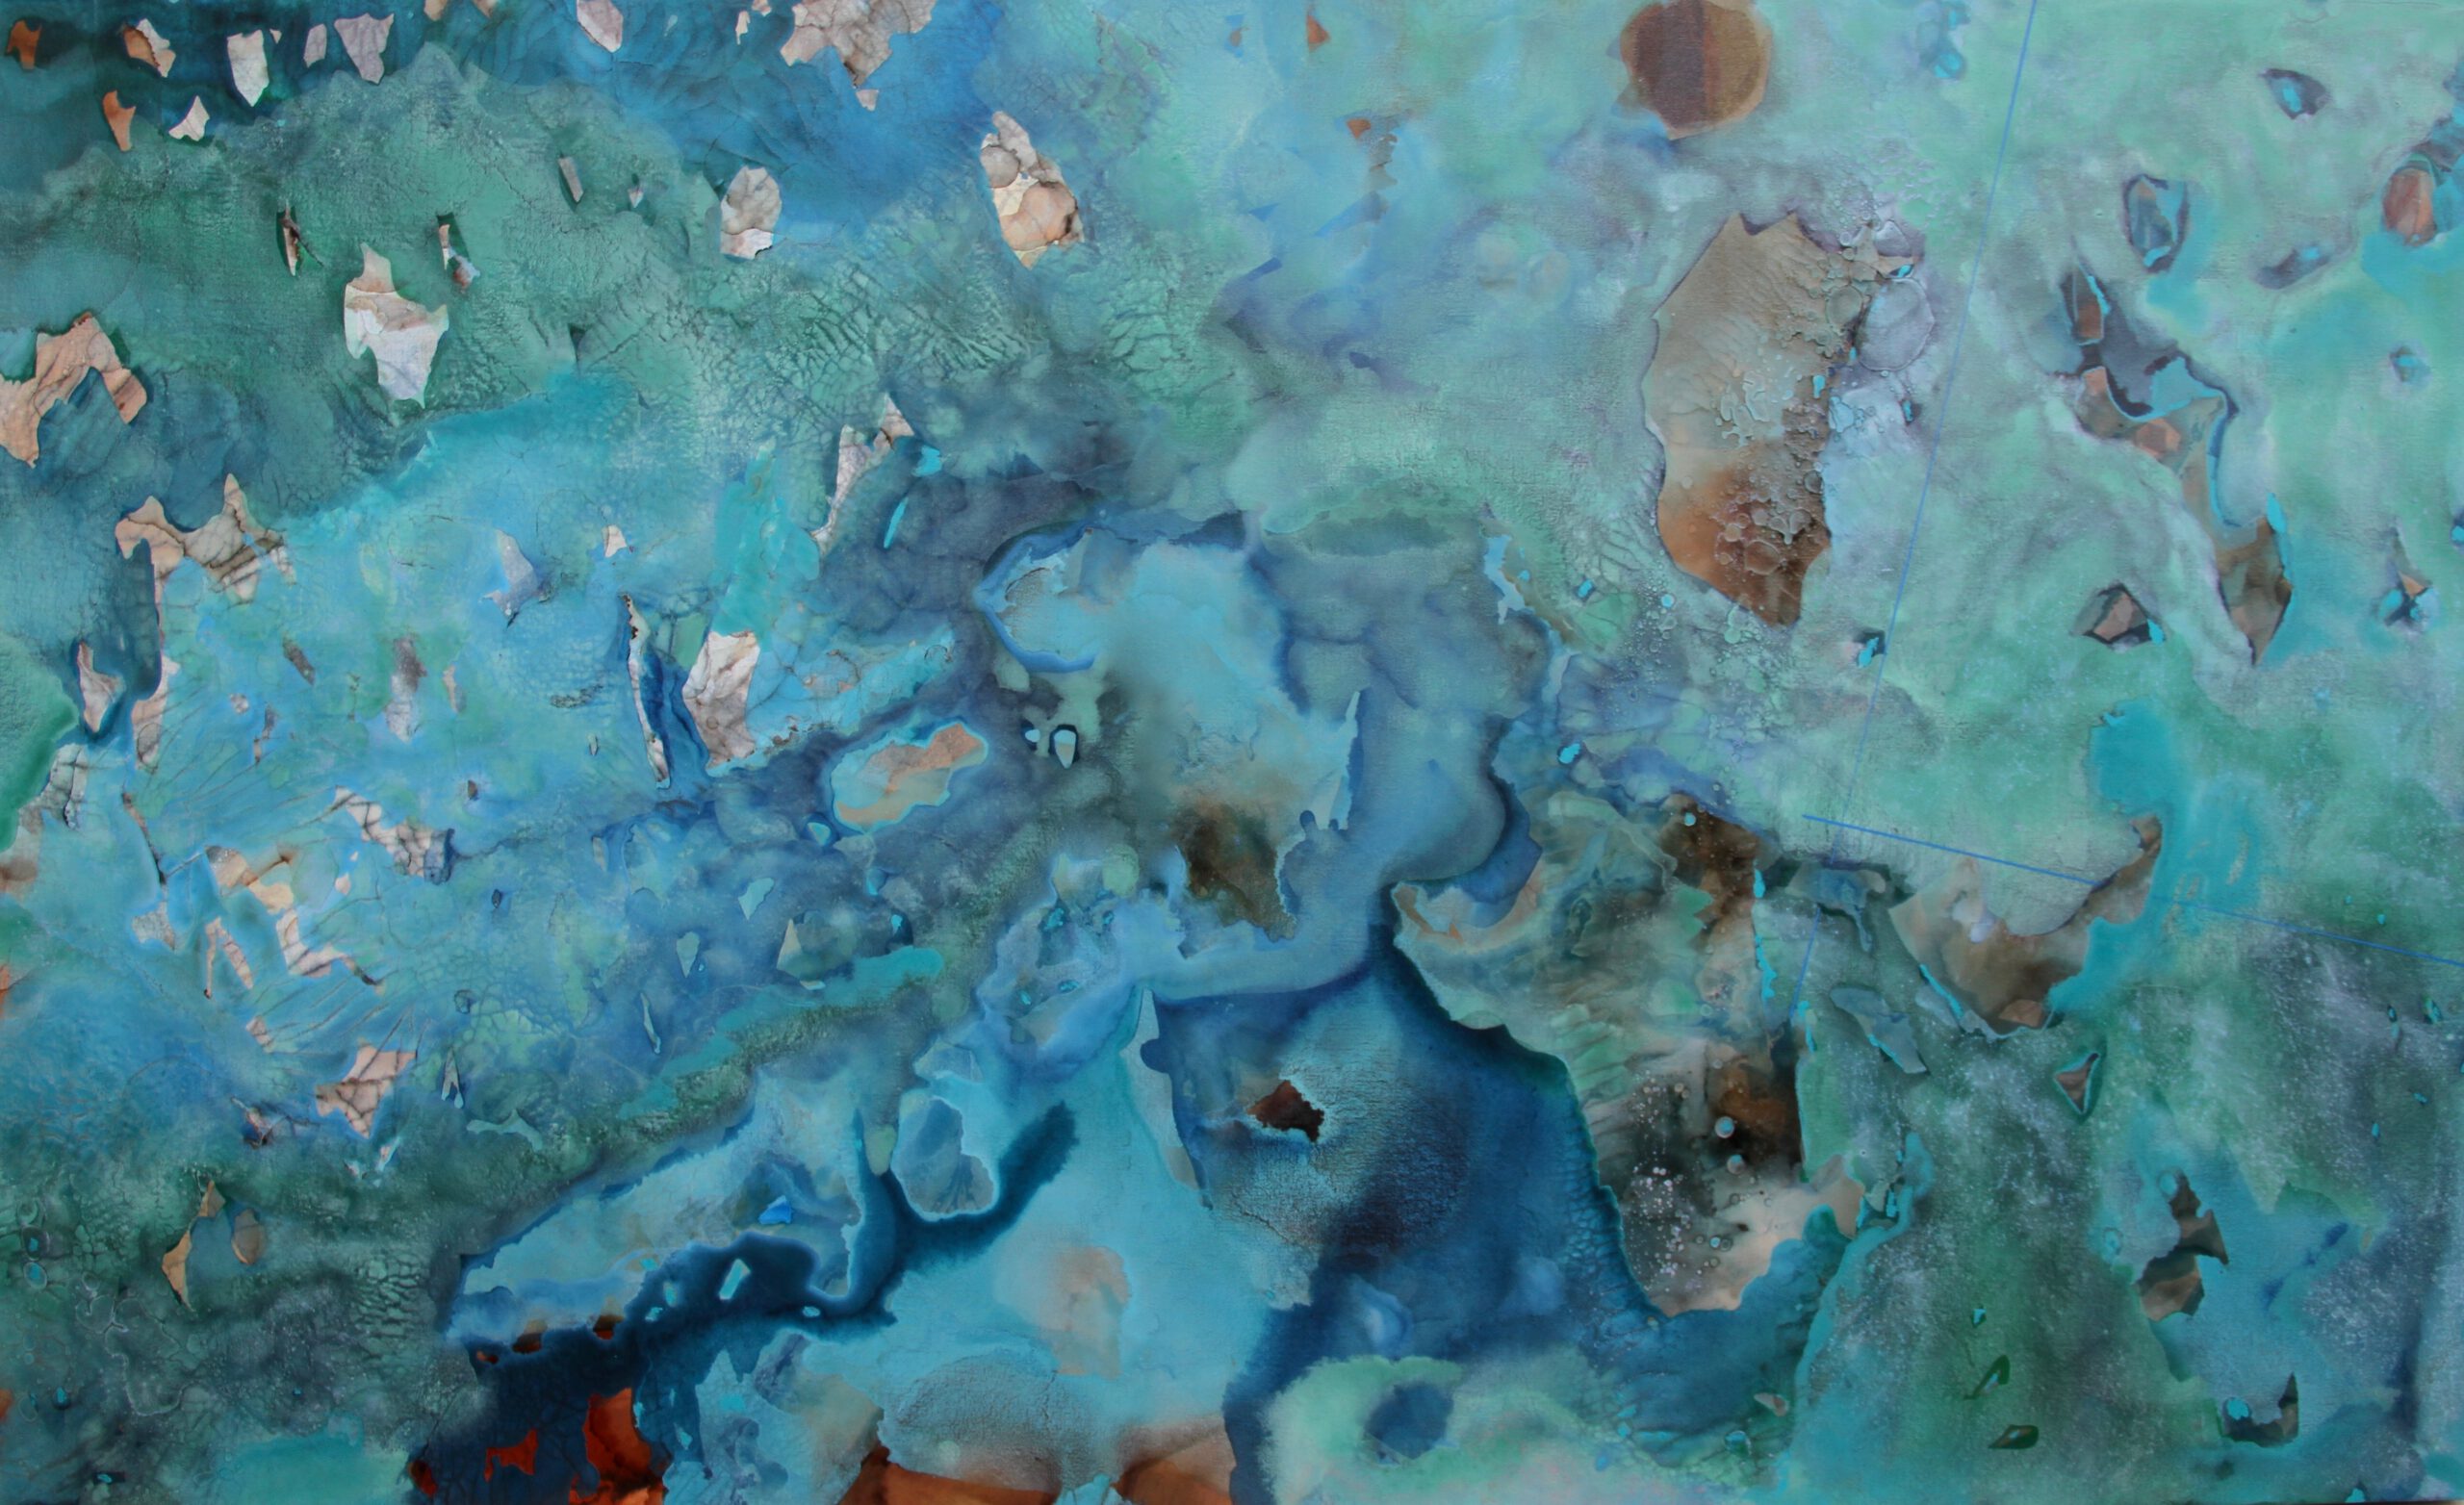 Juniper_Water Follows water_mixed media on canvas_90 x 150cm_master